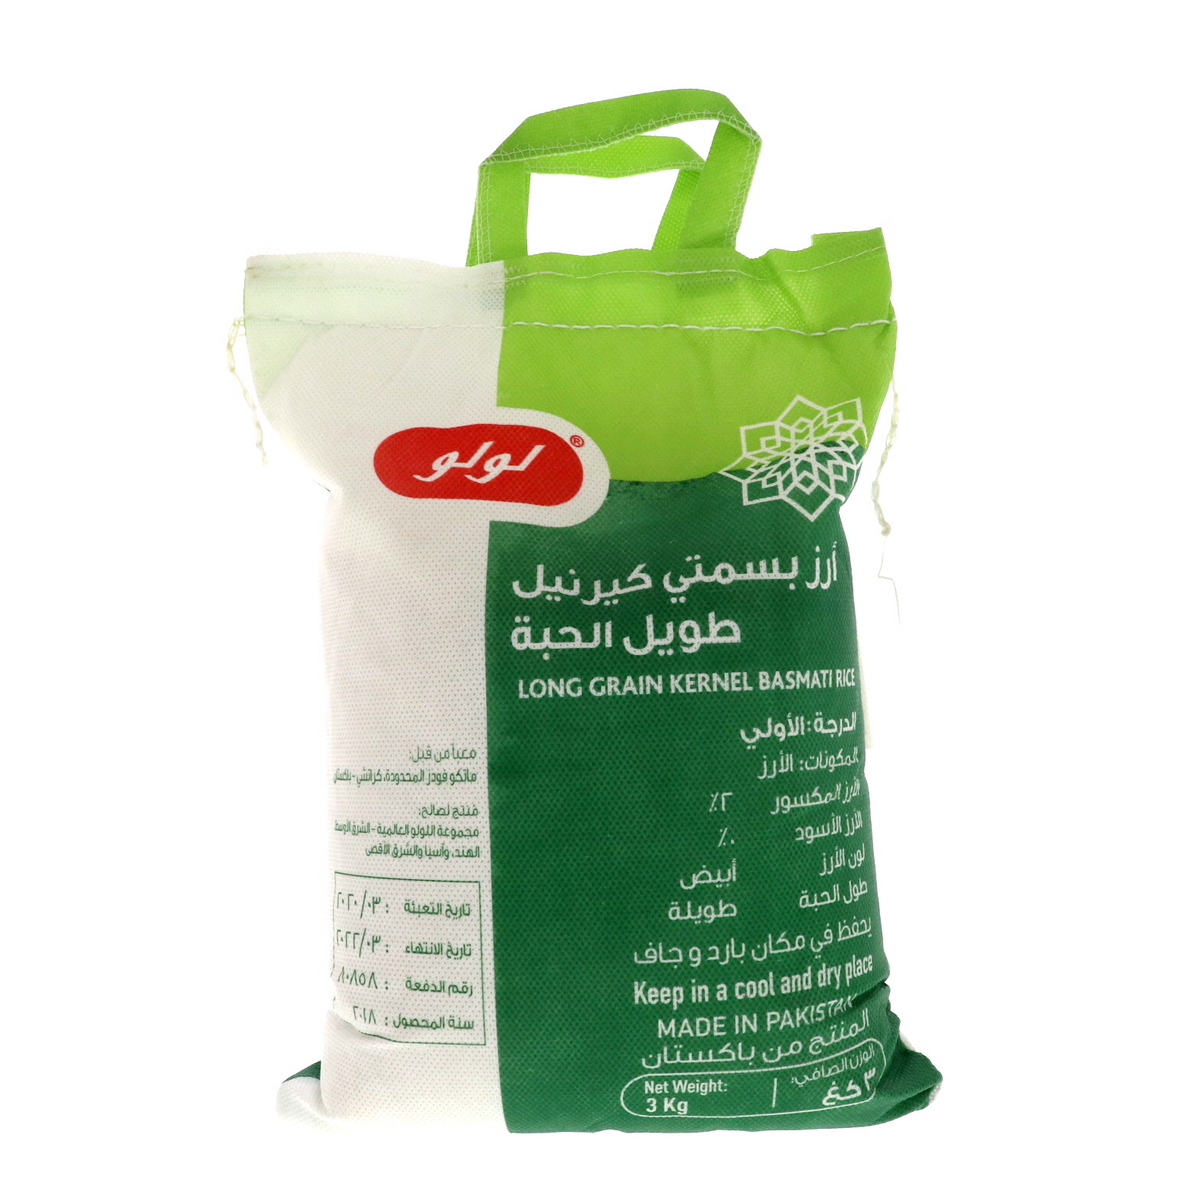 Lulu Long Grain Kernel Basmati Rice 3kg